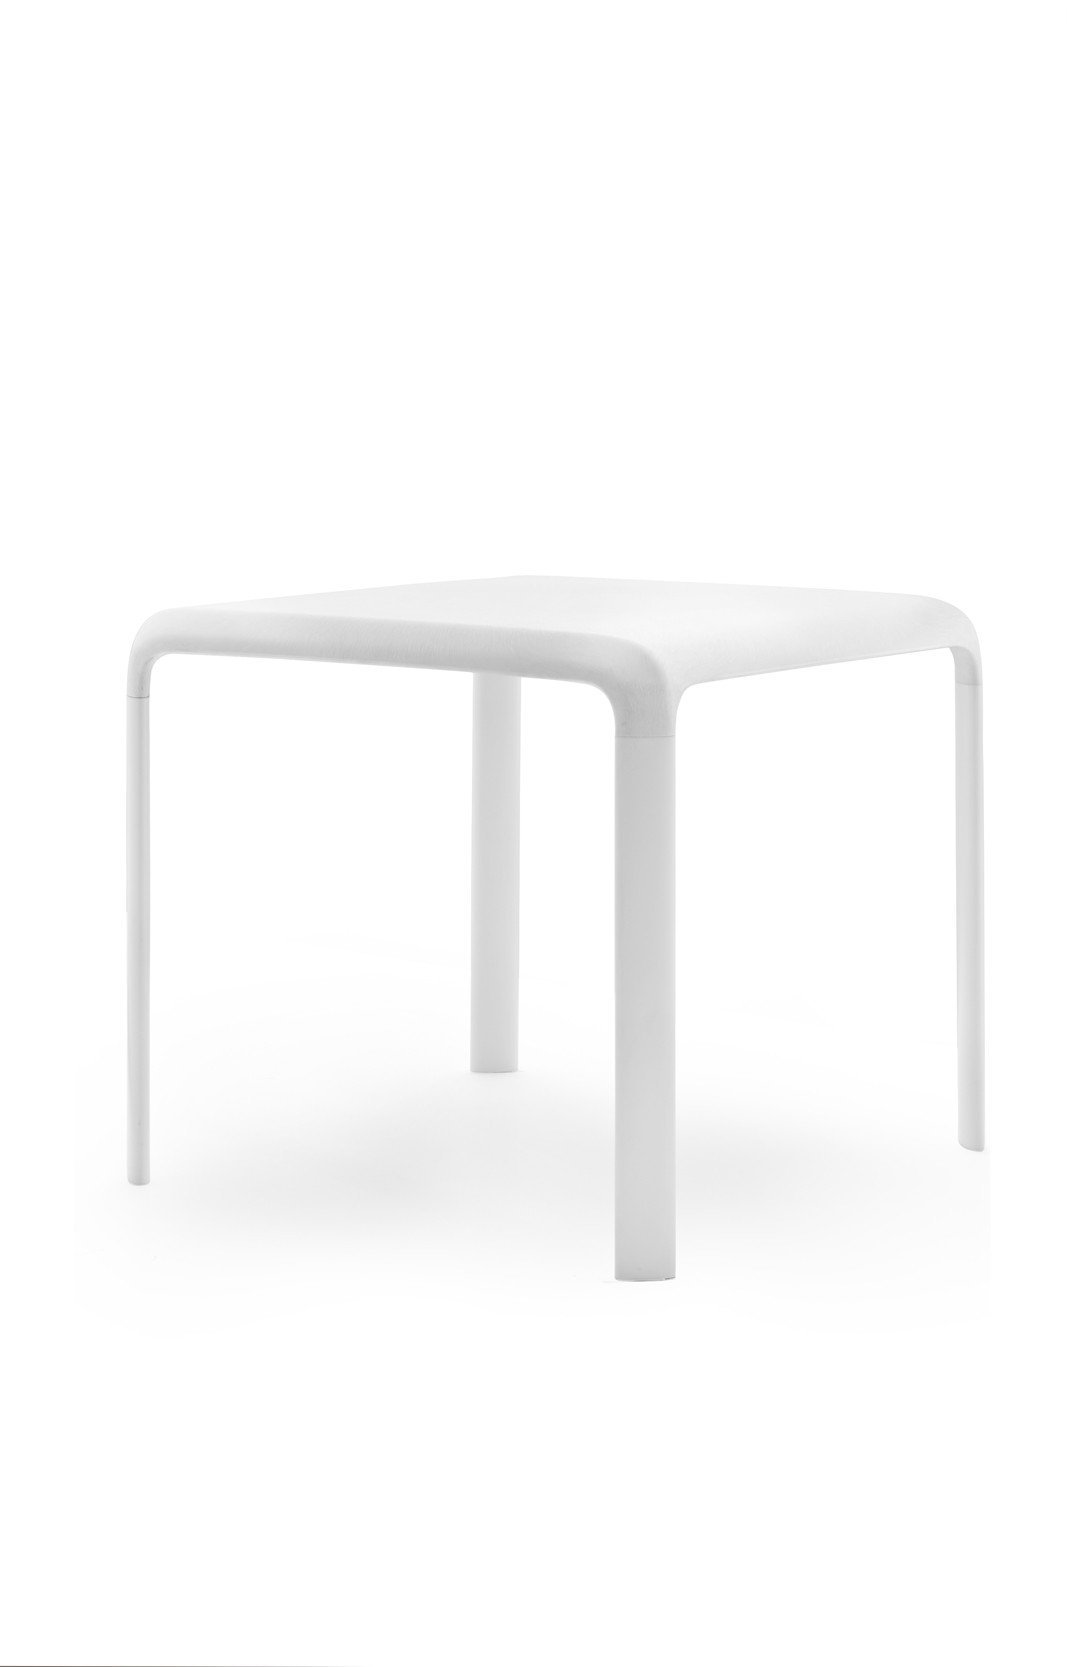 Snow 301 Table-Pedrali-Contract Furniture Store